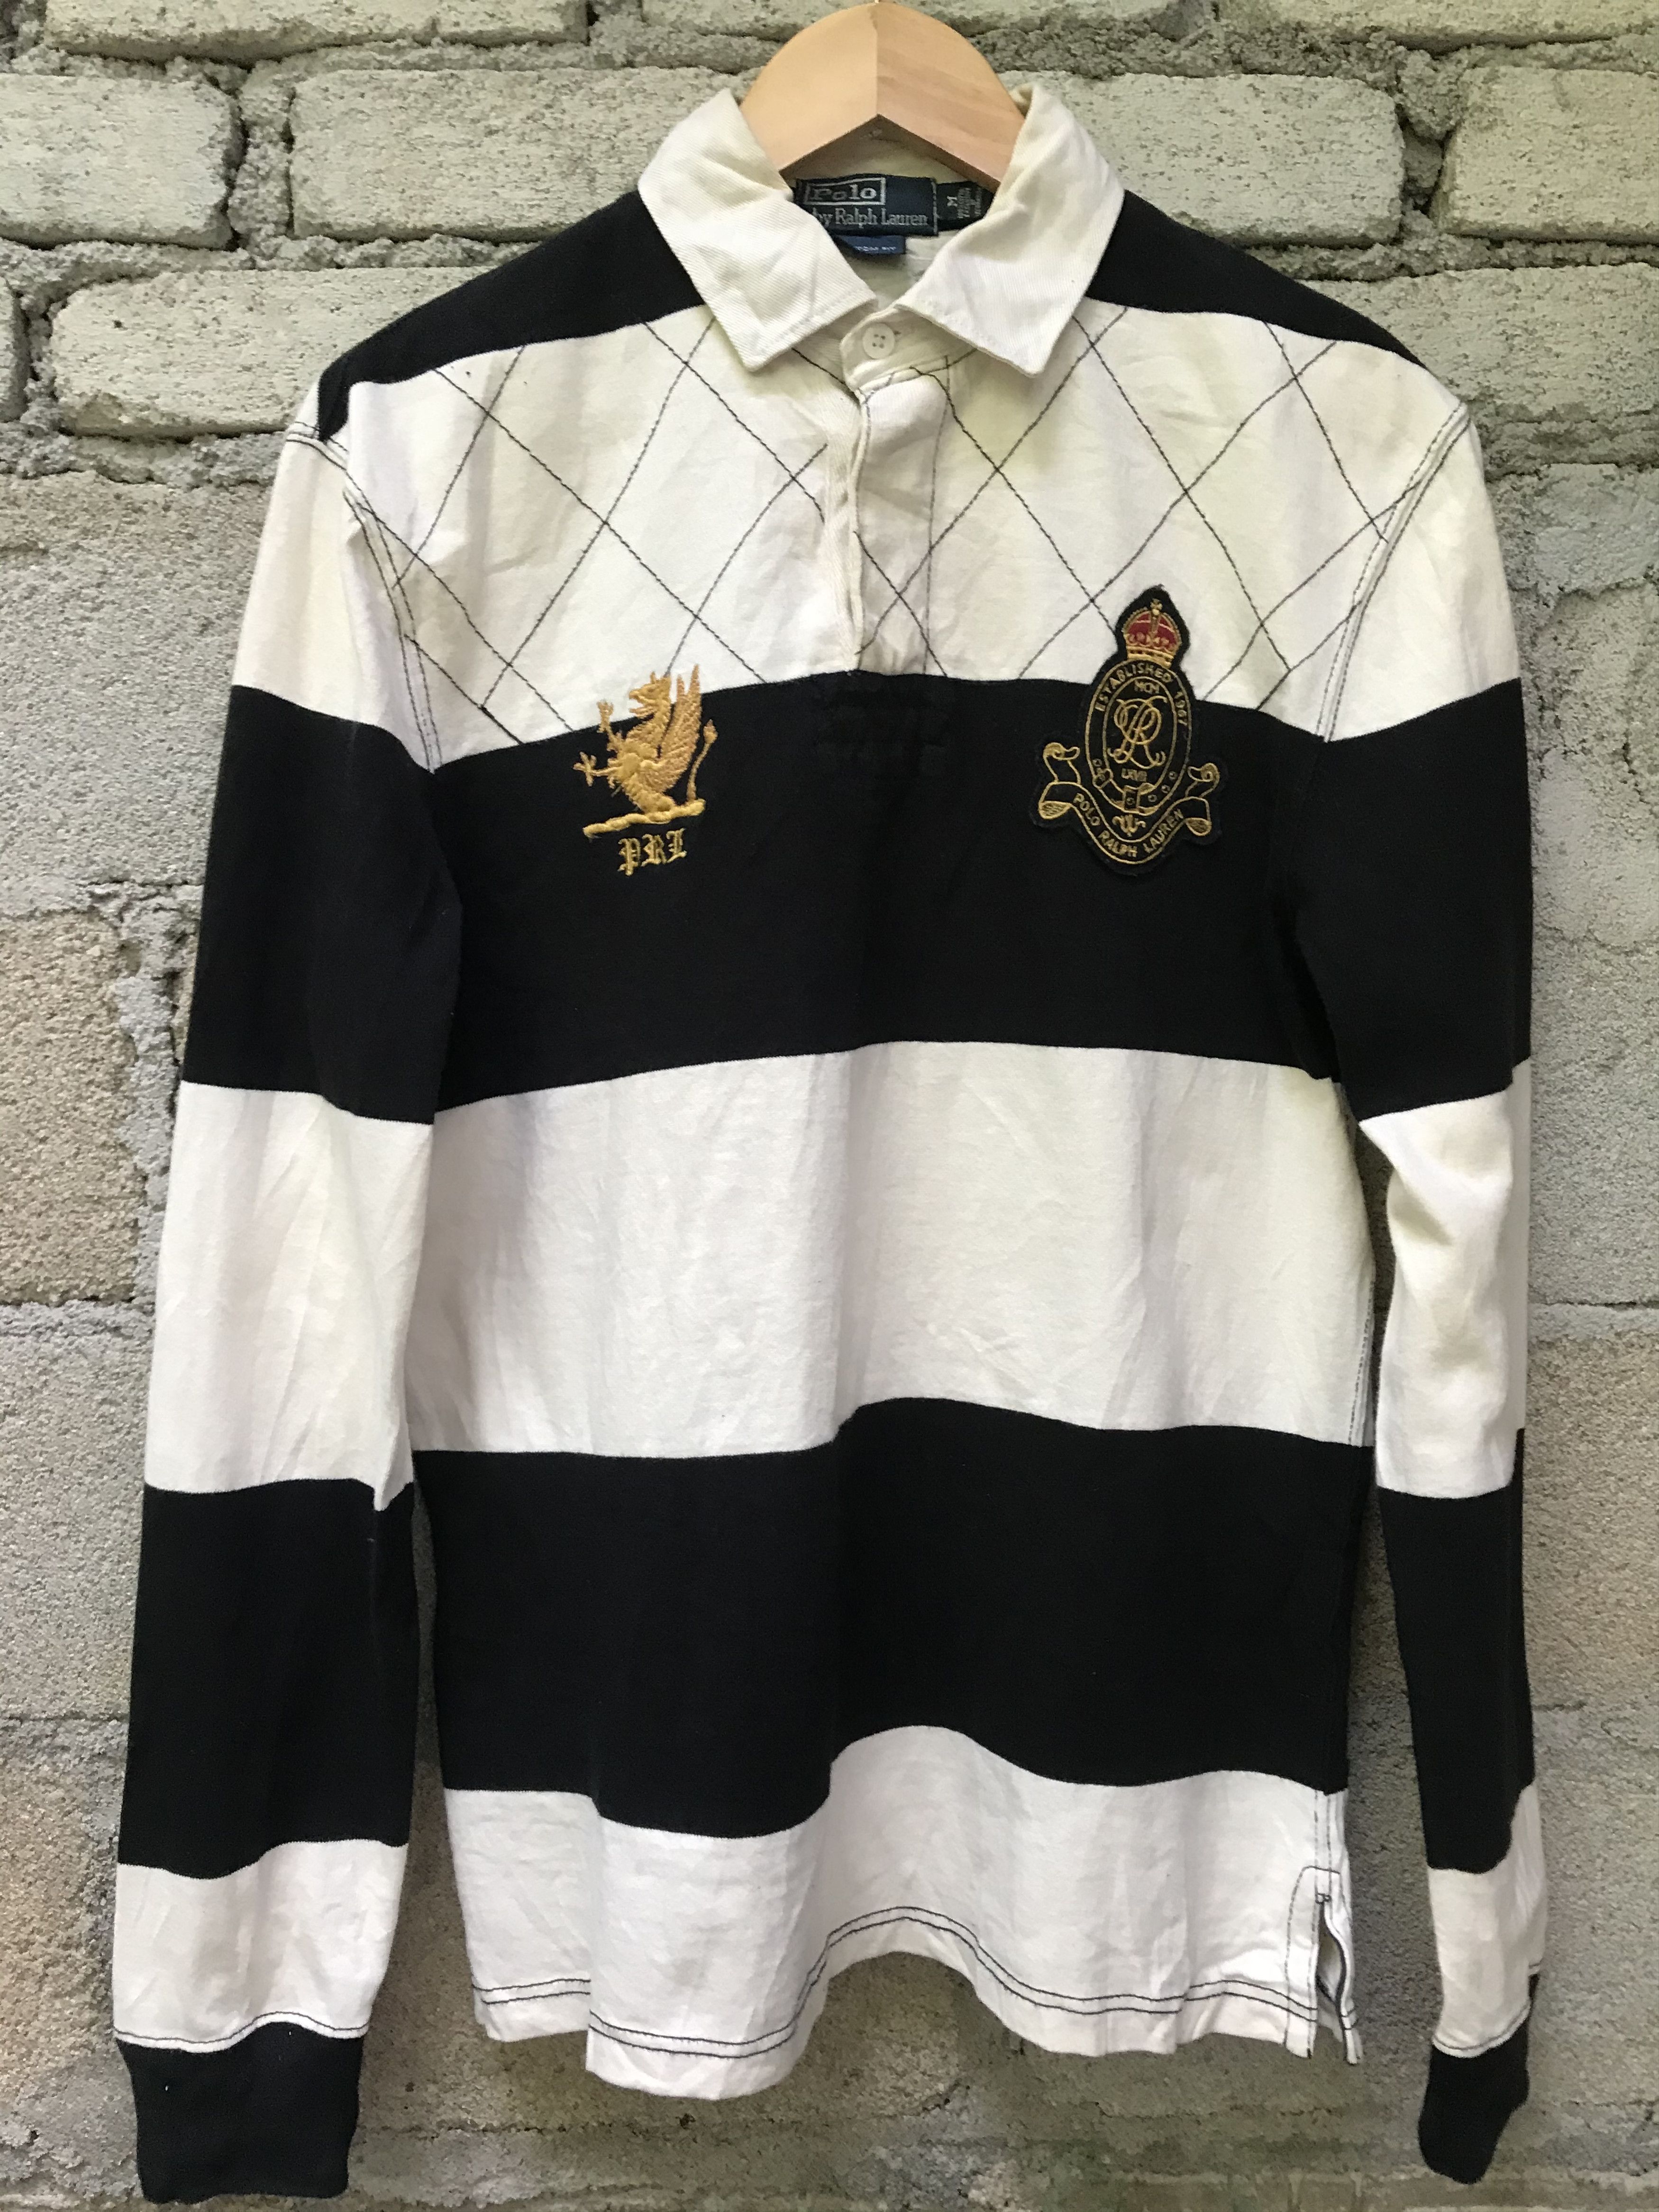 Polo Ralph Lauren - Polo Raph Lauren Rugby HipHop Style STRIPE Shirt - 2